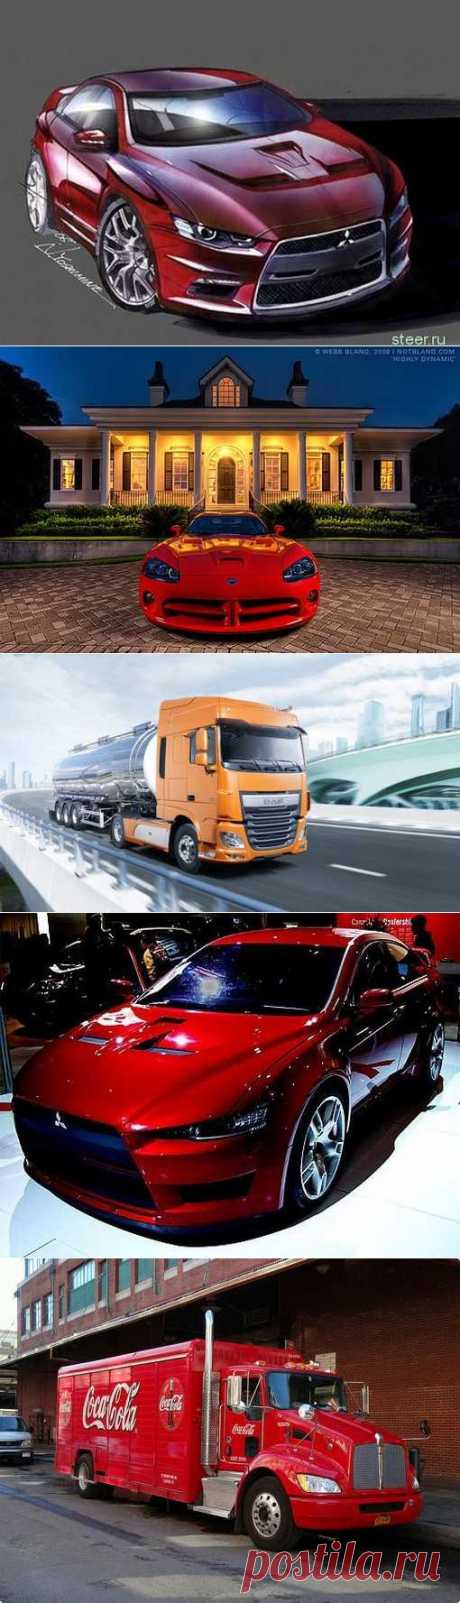 Koenigsegg, Ford, Kia, BMW, Ferrari. (1/1) - Авто форум - Auto